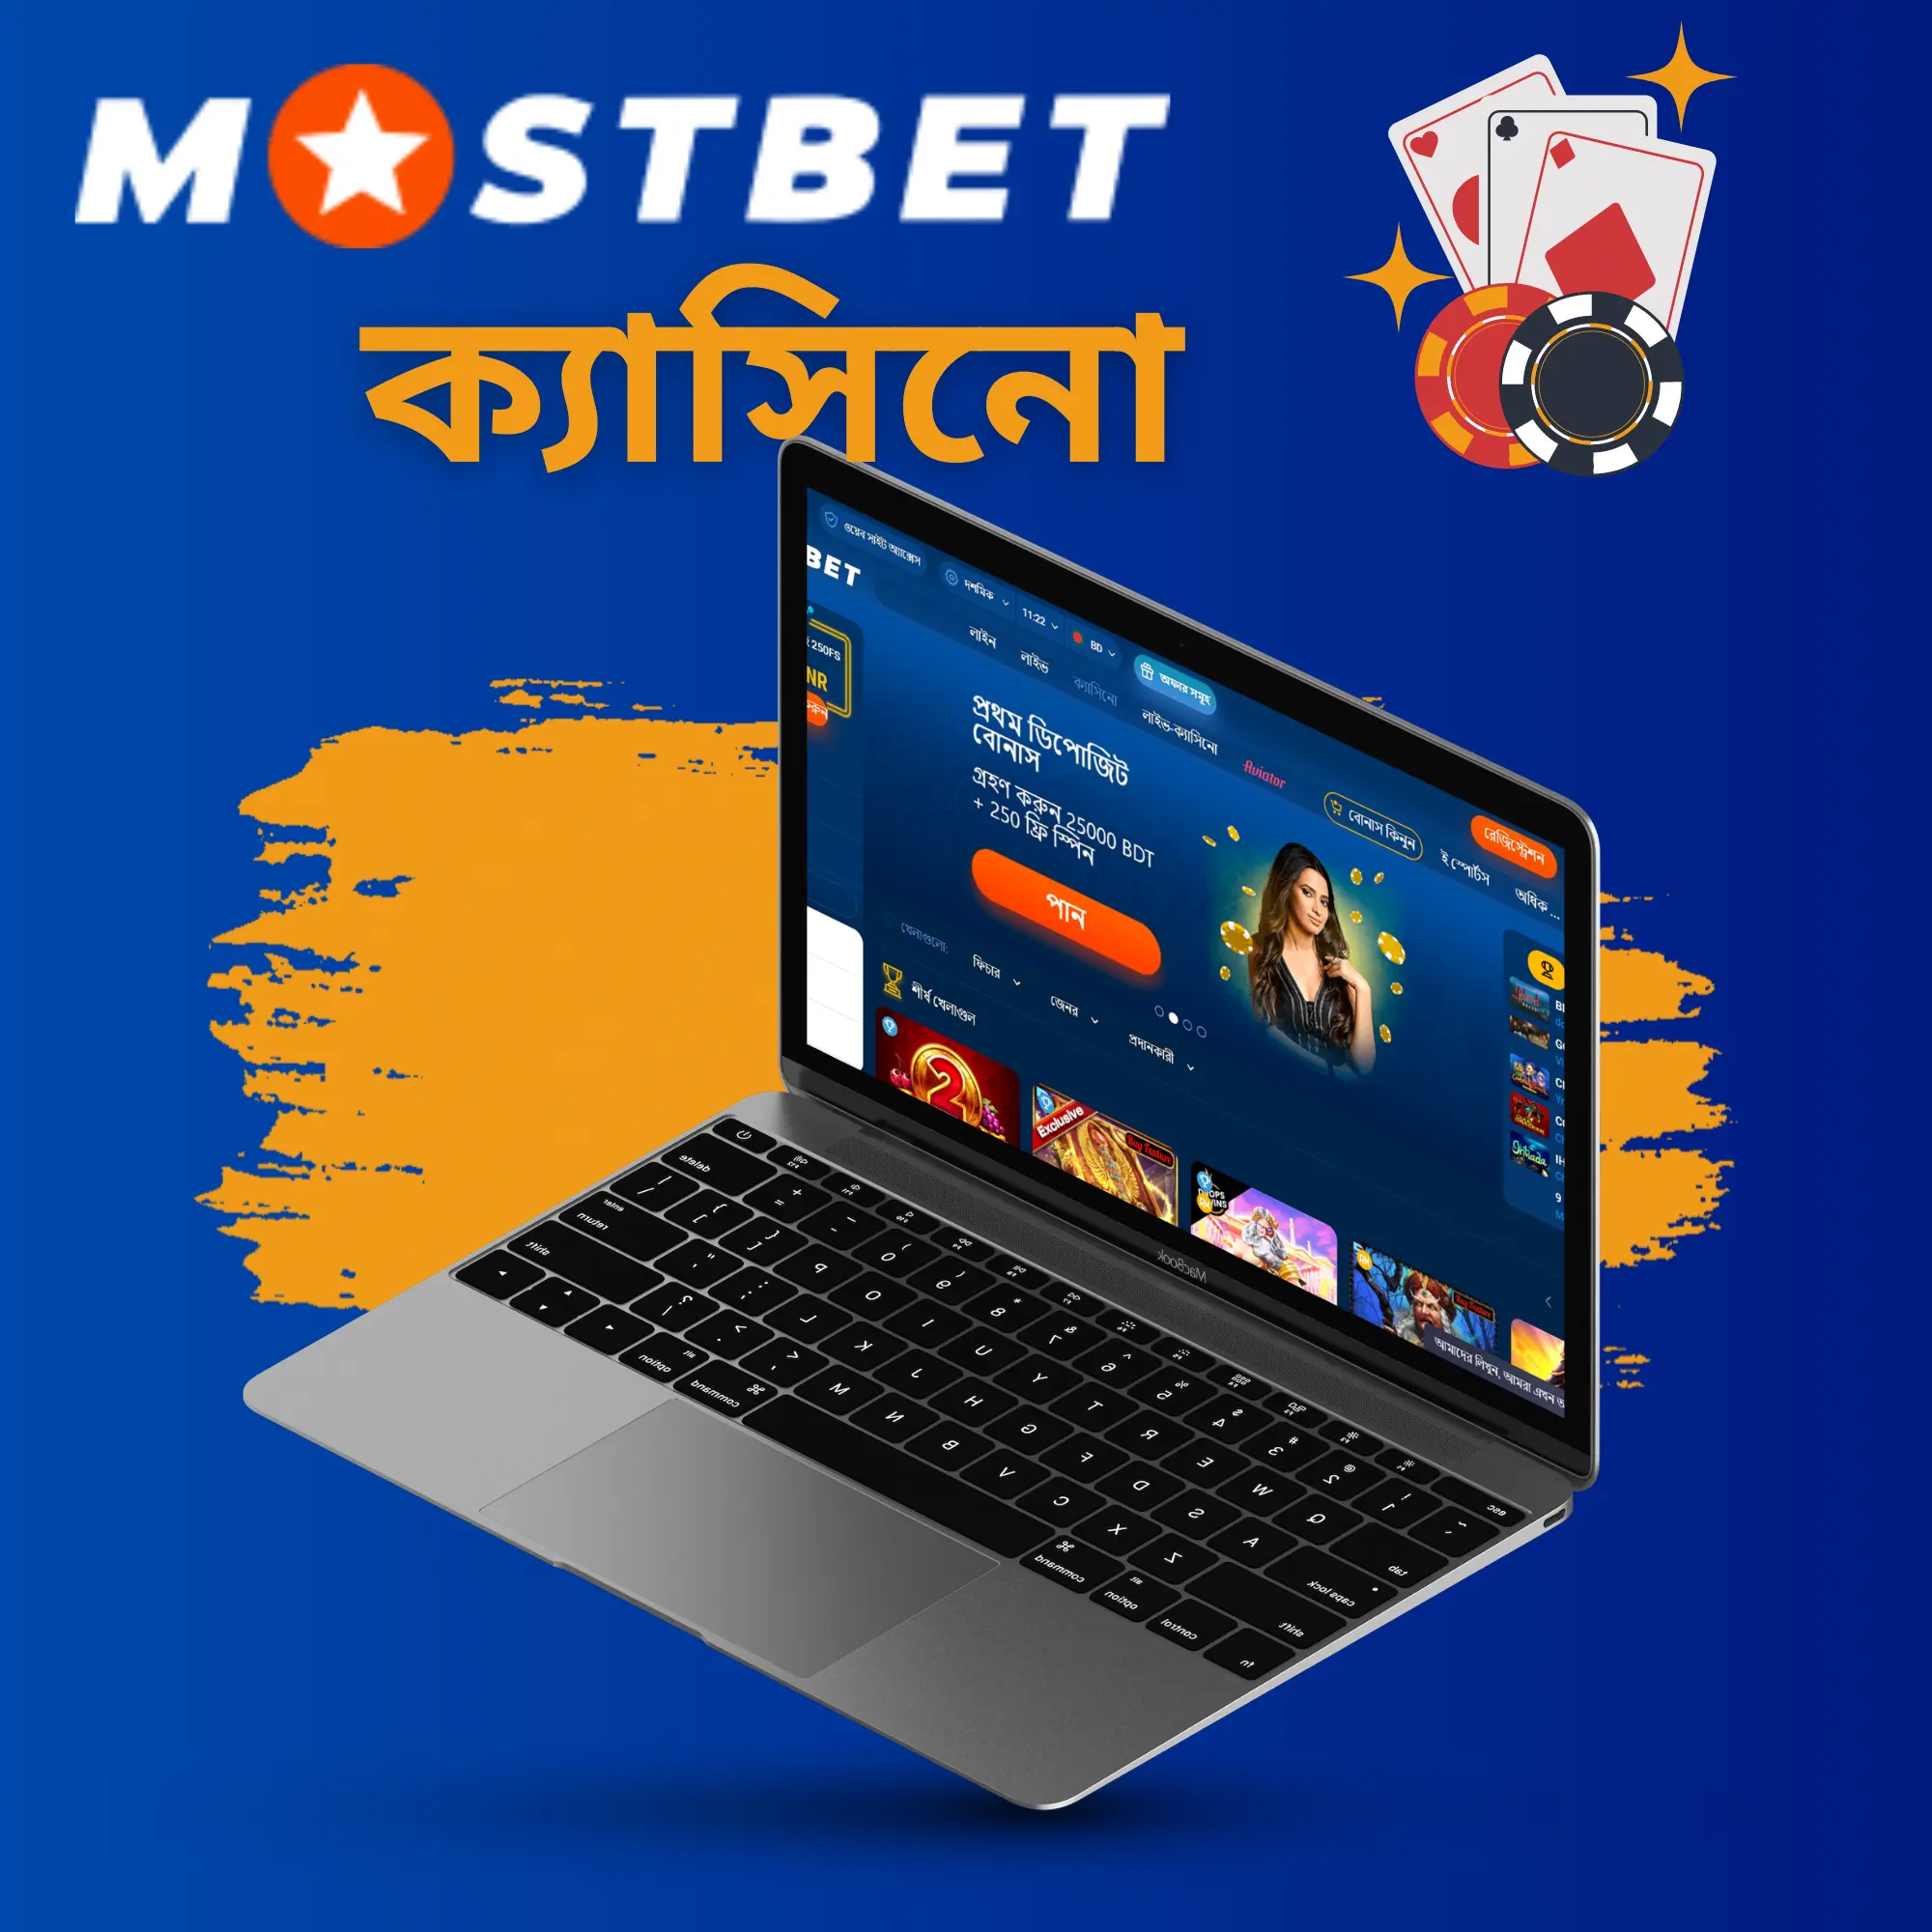 Mostbet Online Casino in Bangladesh